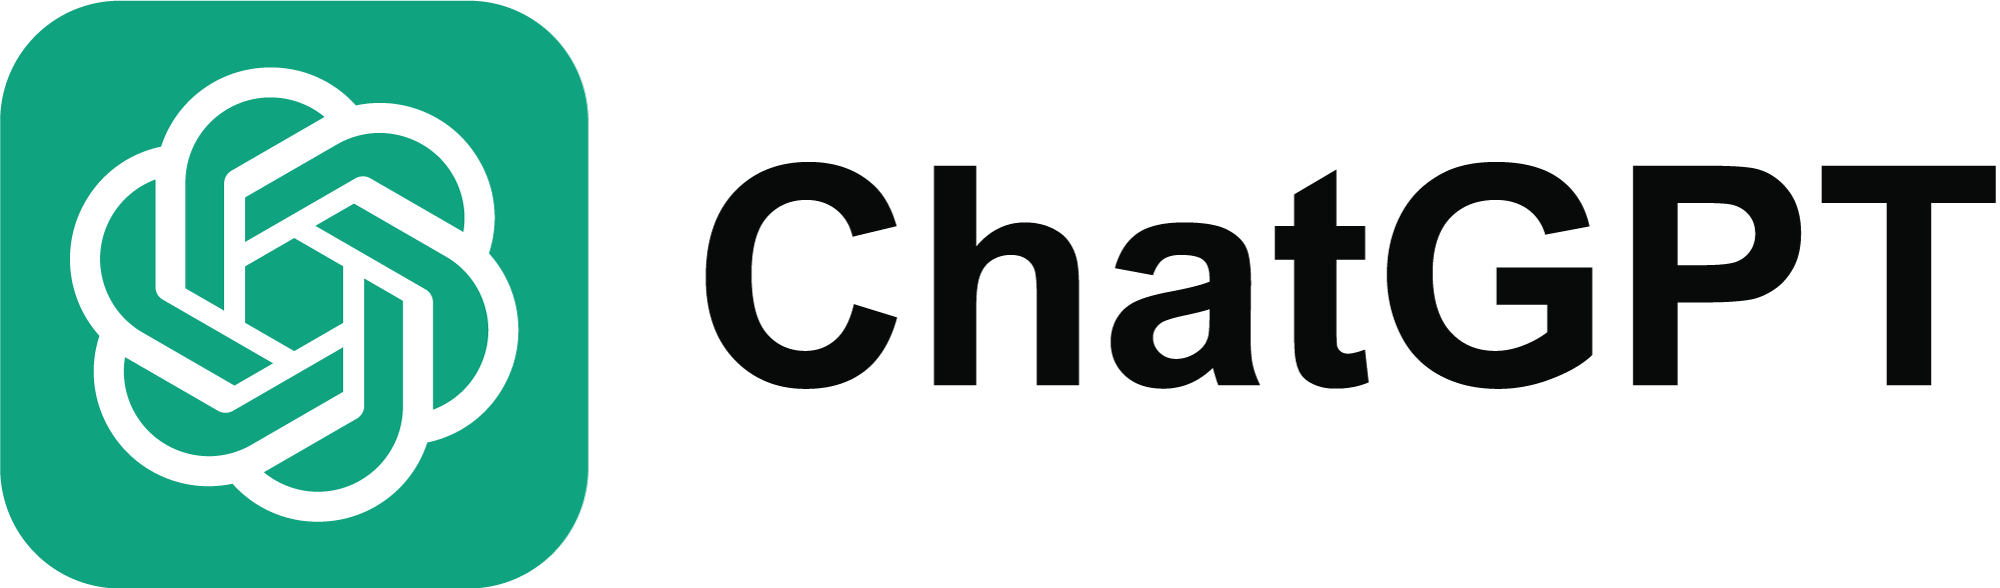 ChatGPT Icon Logo